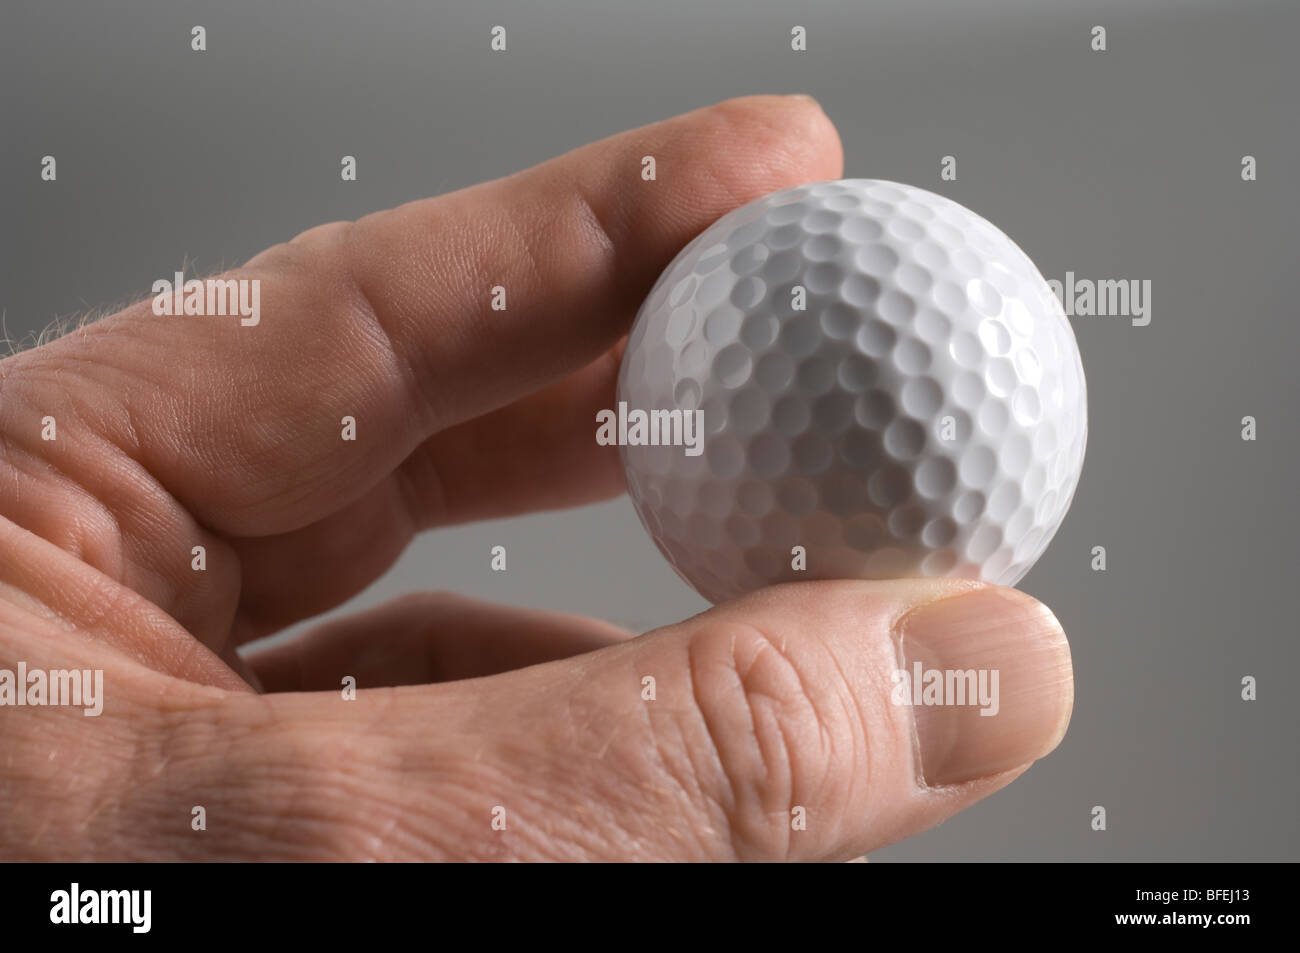 A man's hand holding a golf ball Stock Photo